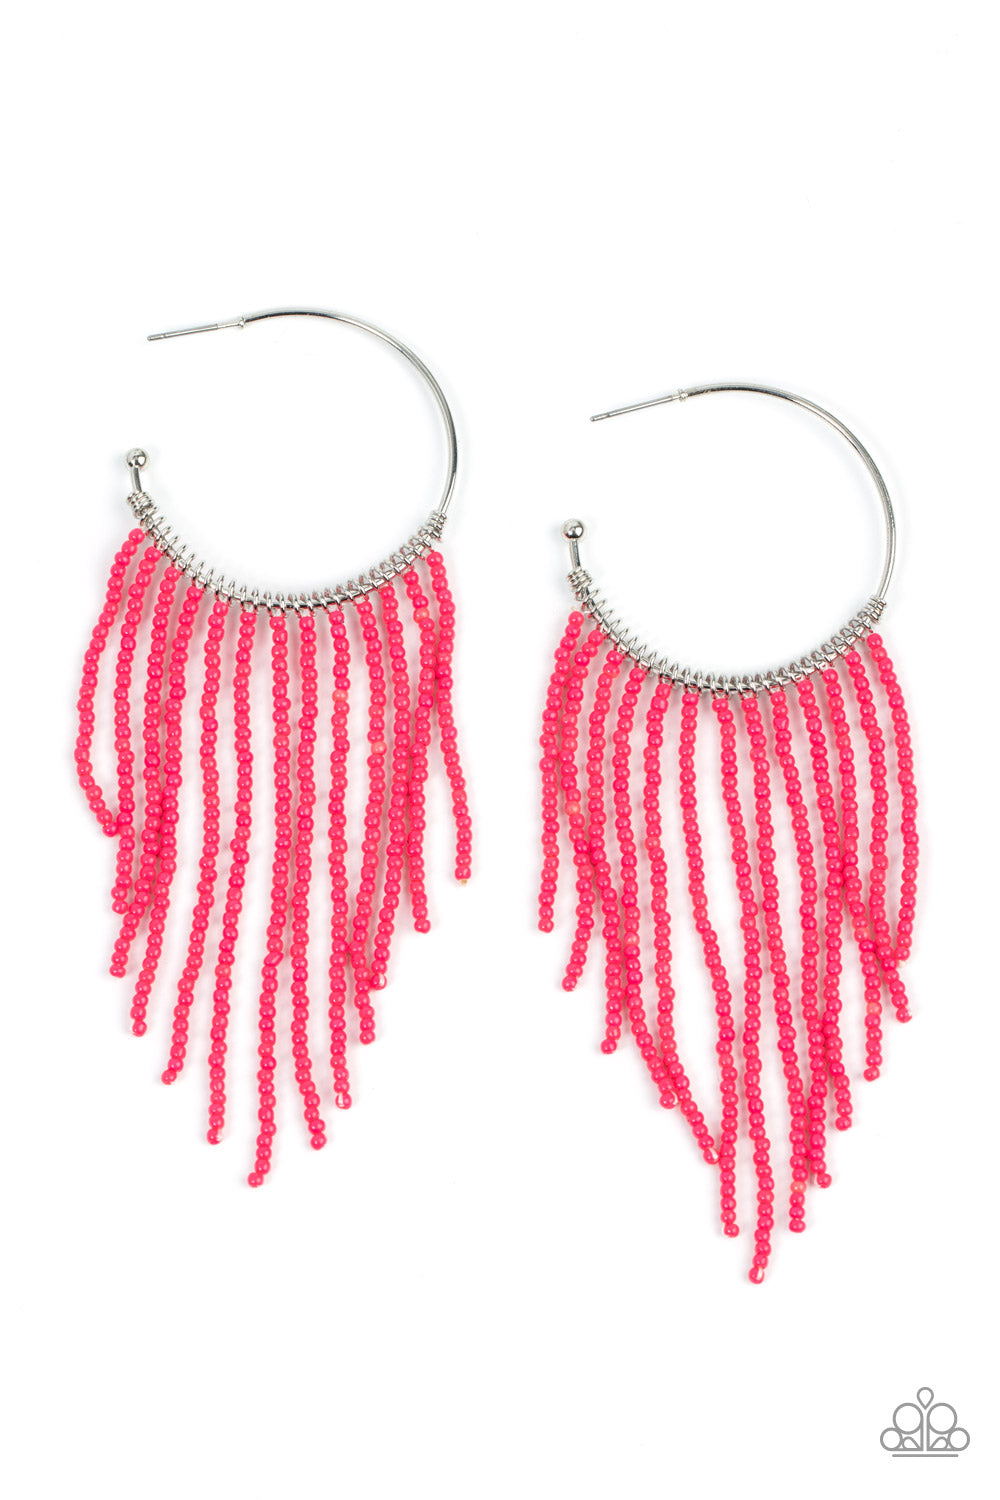 five-dollar-jewelry-saguaro-breeze-pink-earrings-paparazzi-accessories